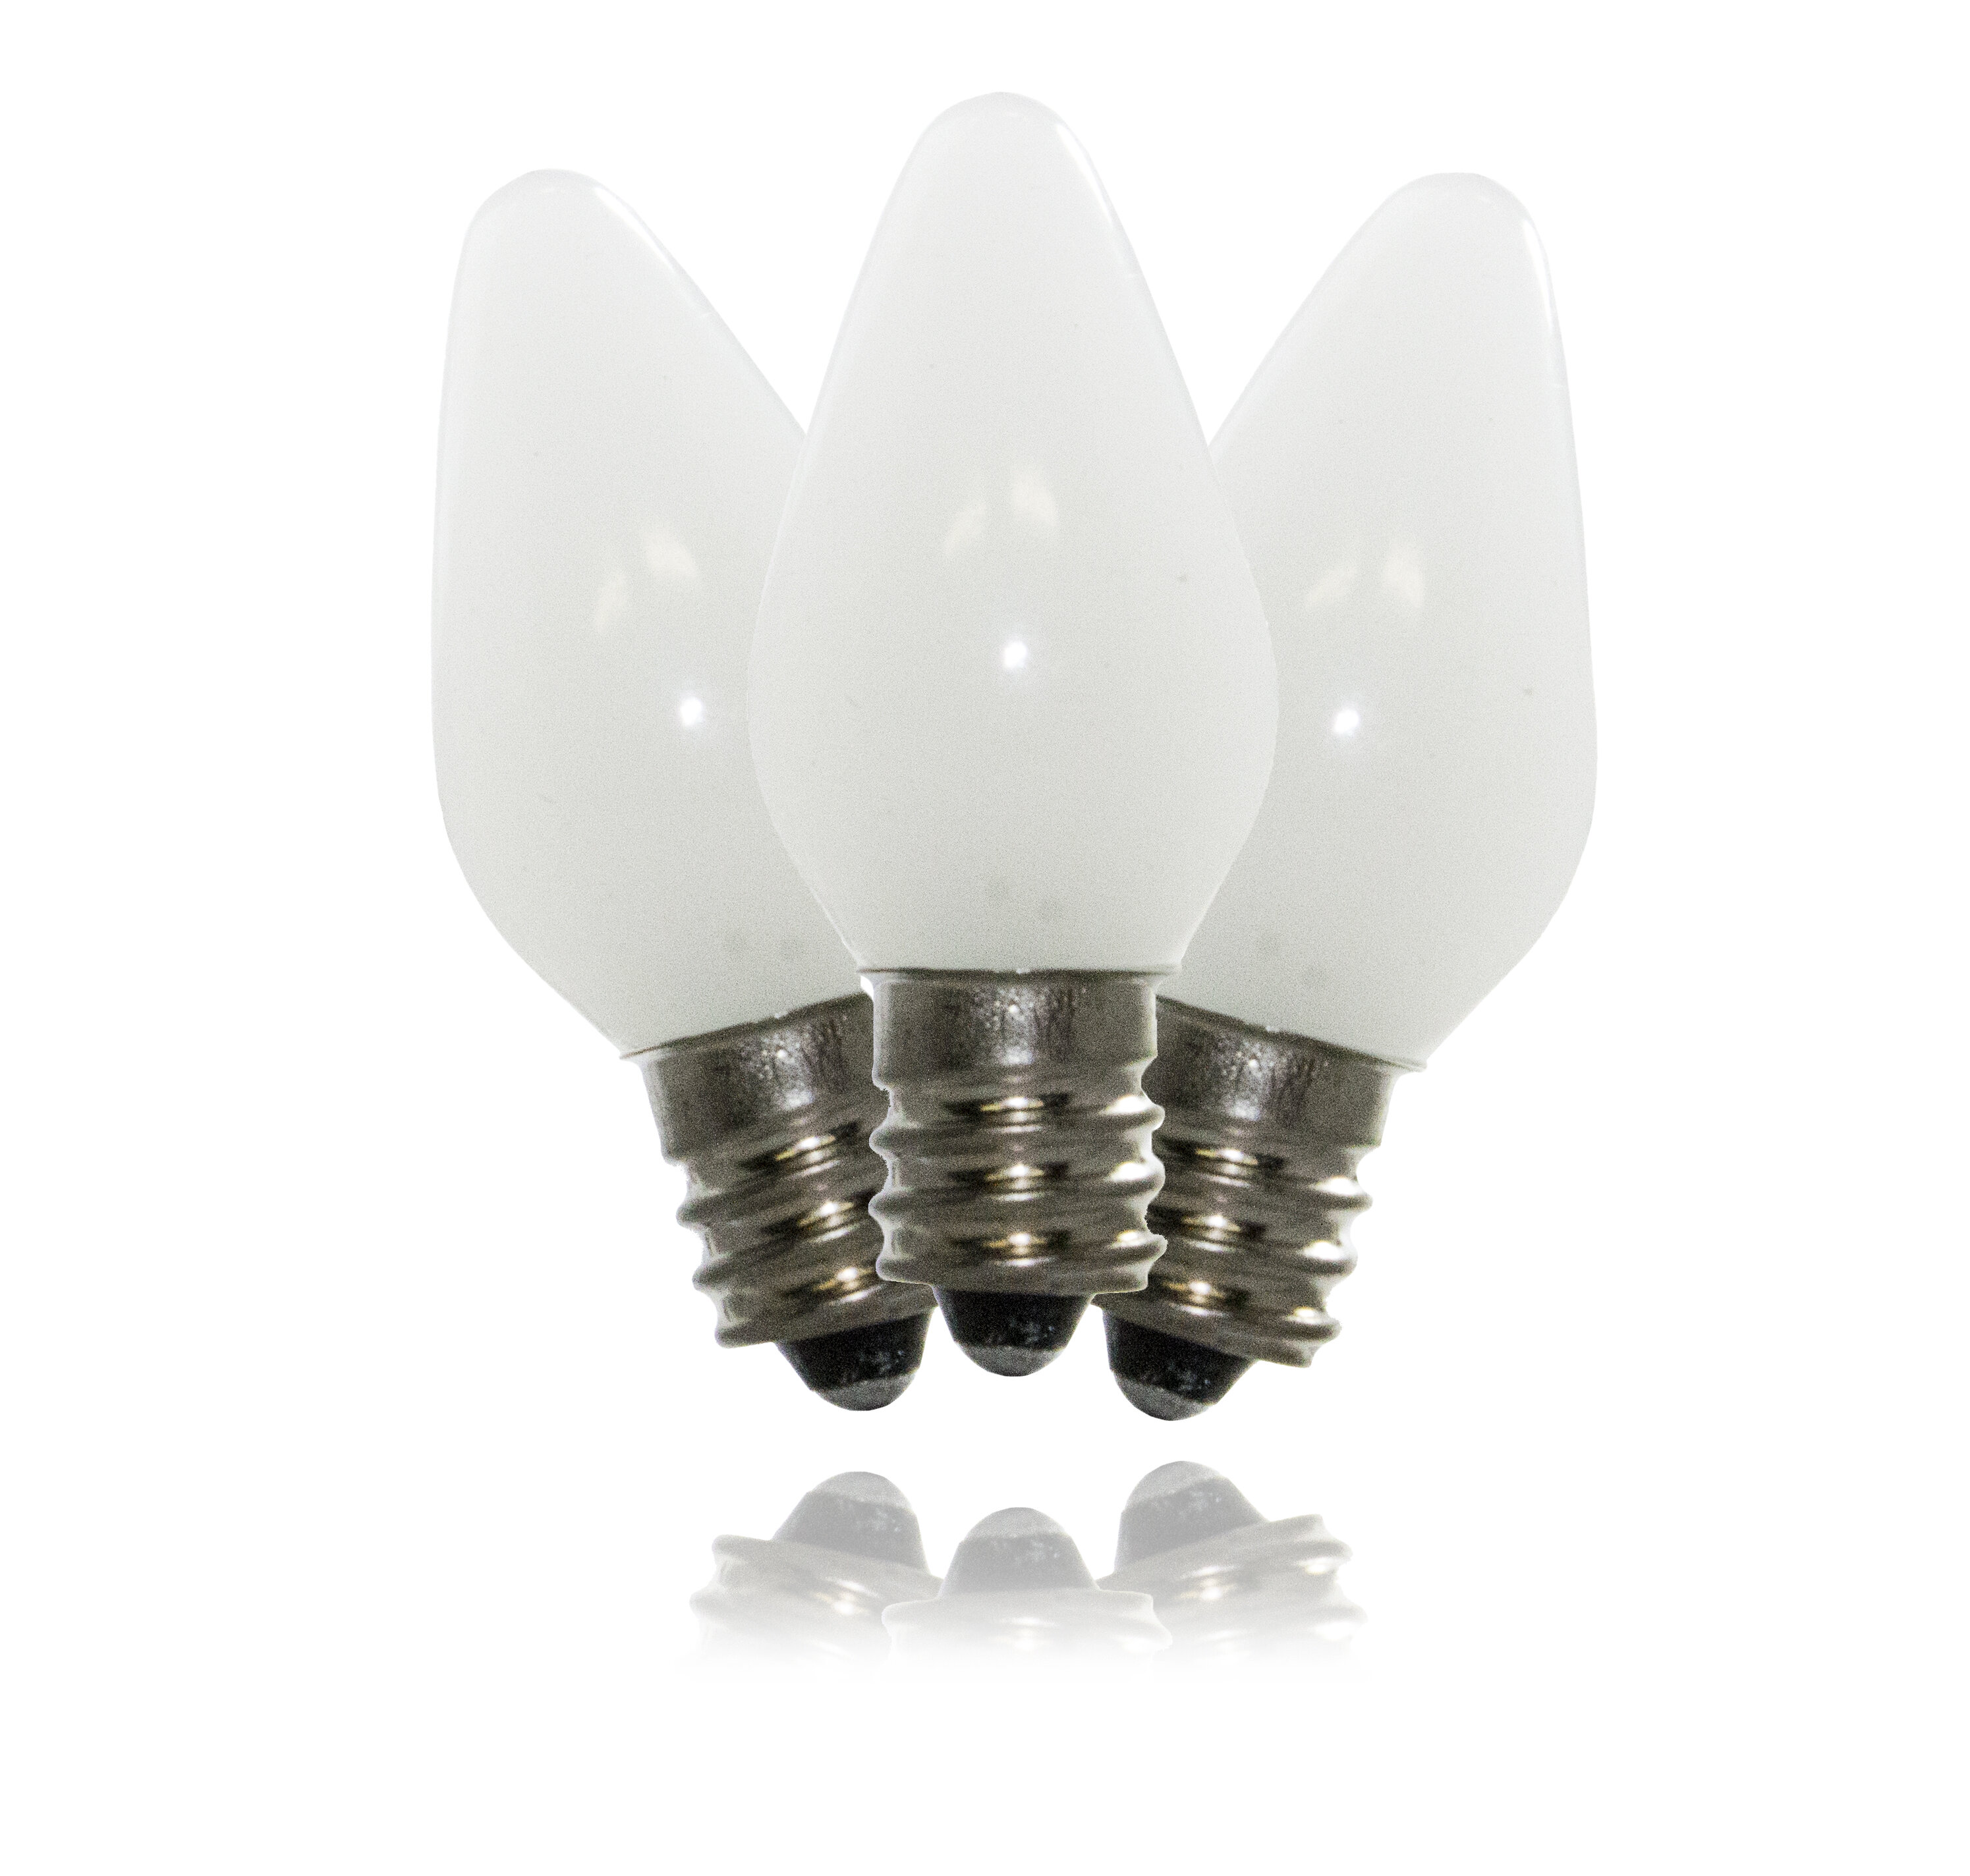 25 watt led light bulbs